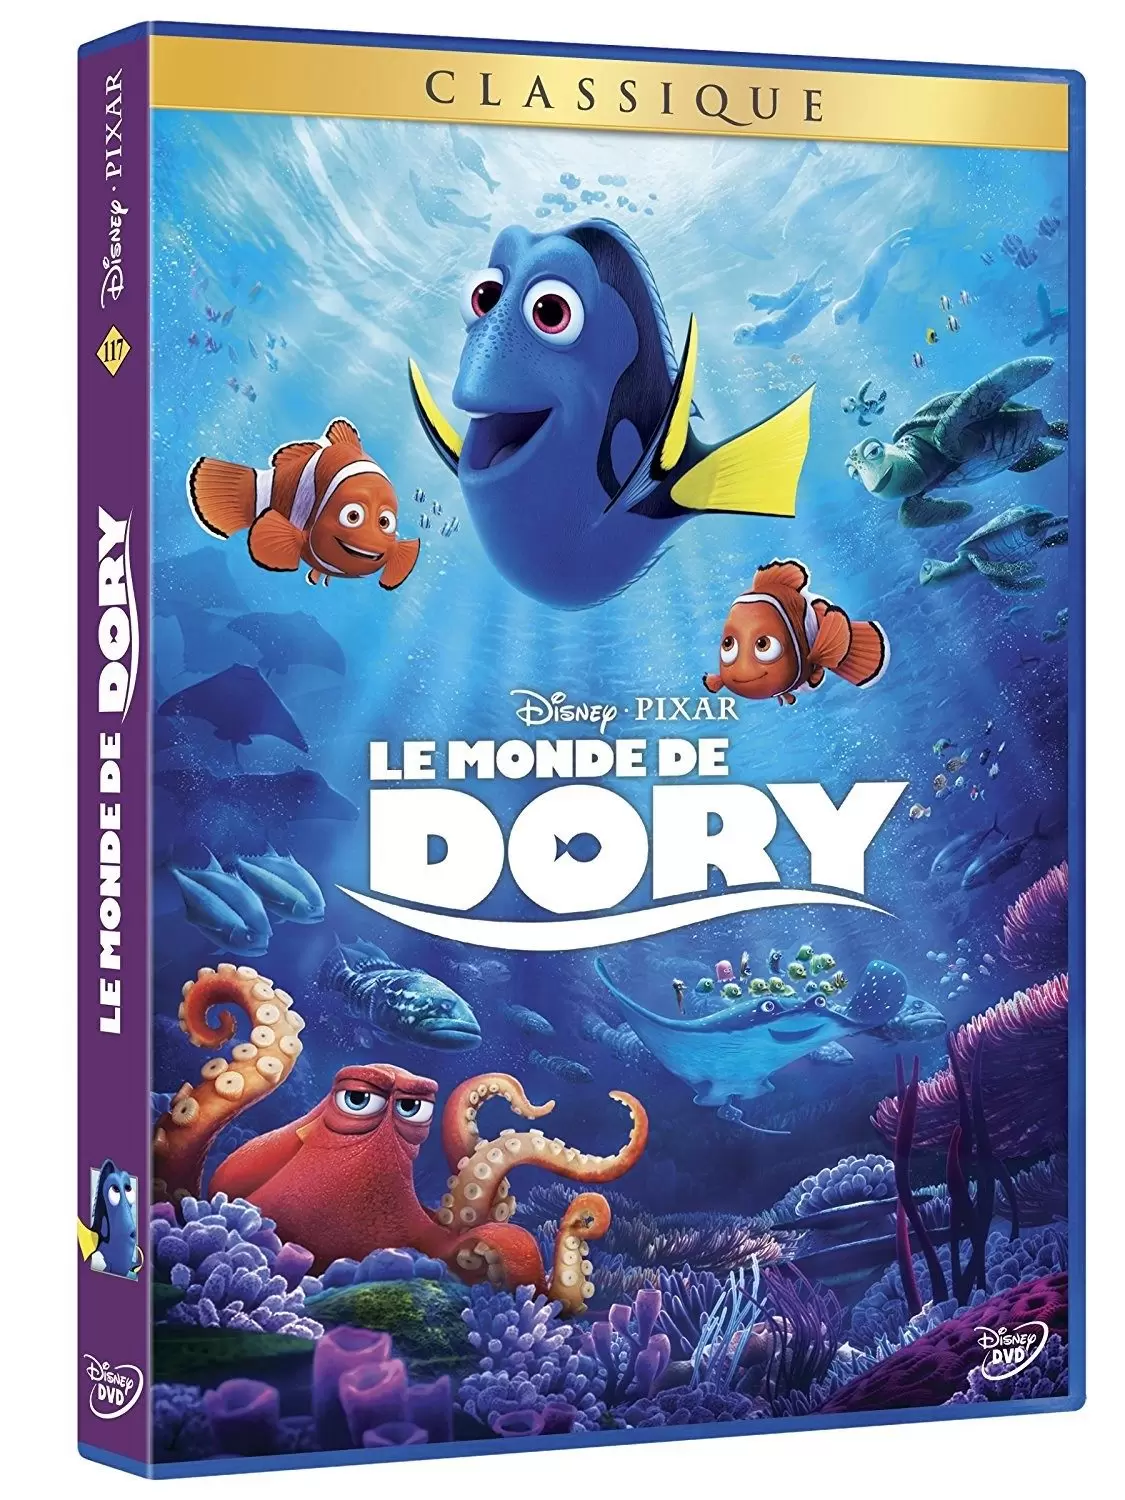 Les grands classiques de Disney en DVD - Le monde de Dory